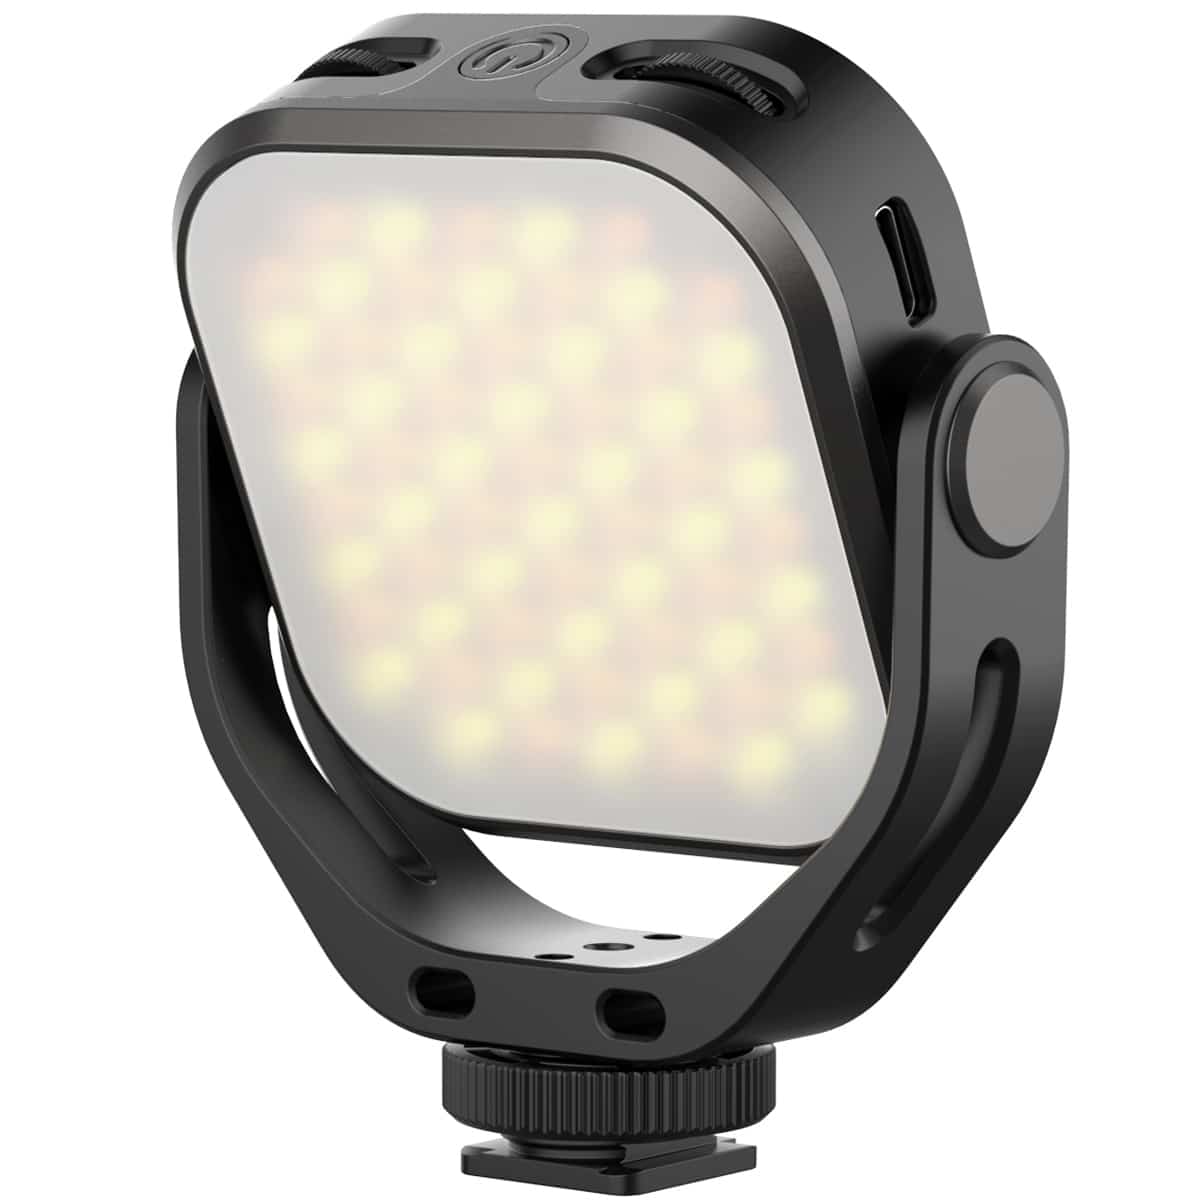 VIJIM VL66 rotatable LED light with adjustable colour temperature